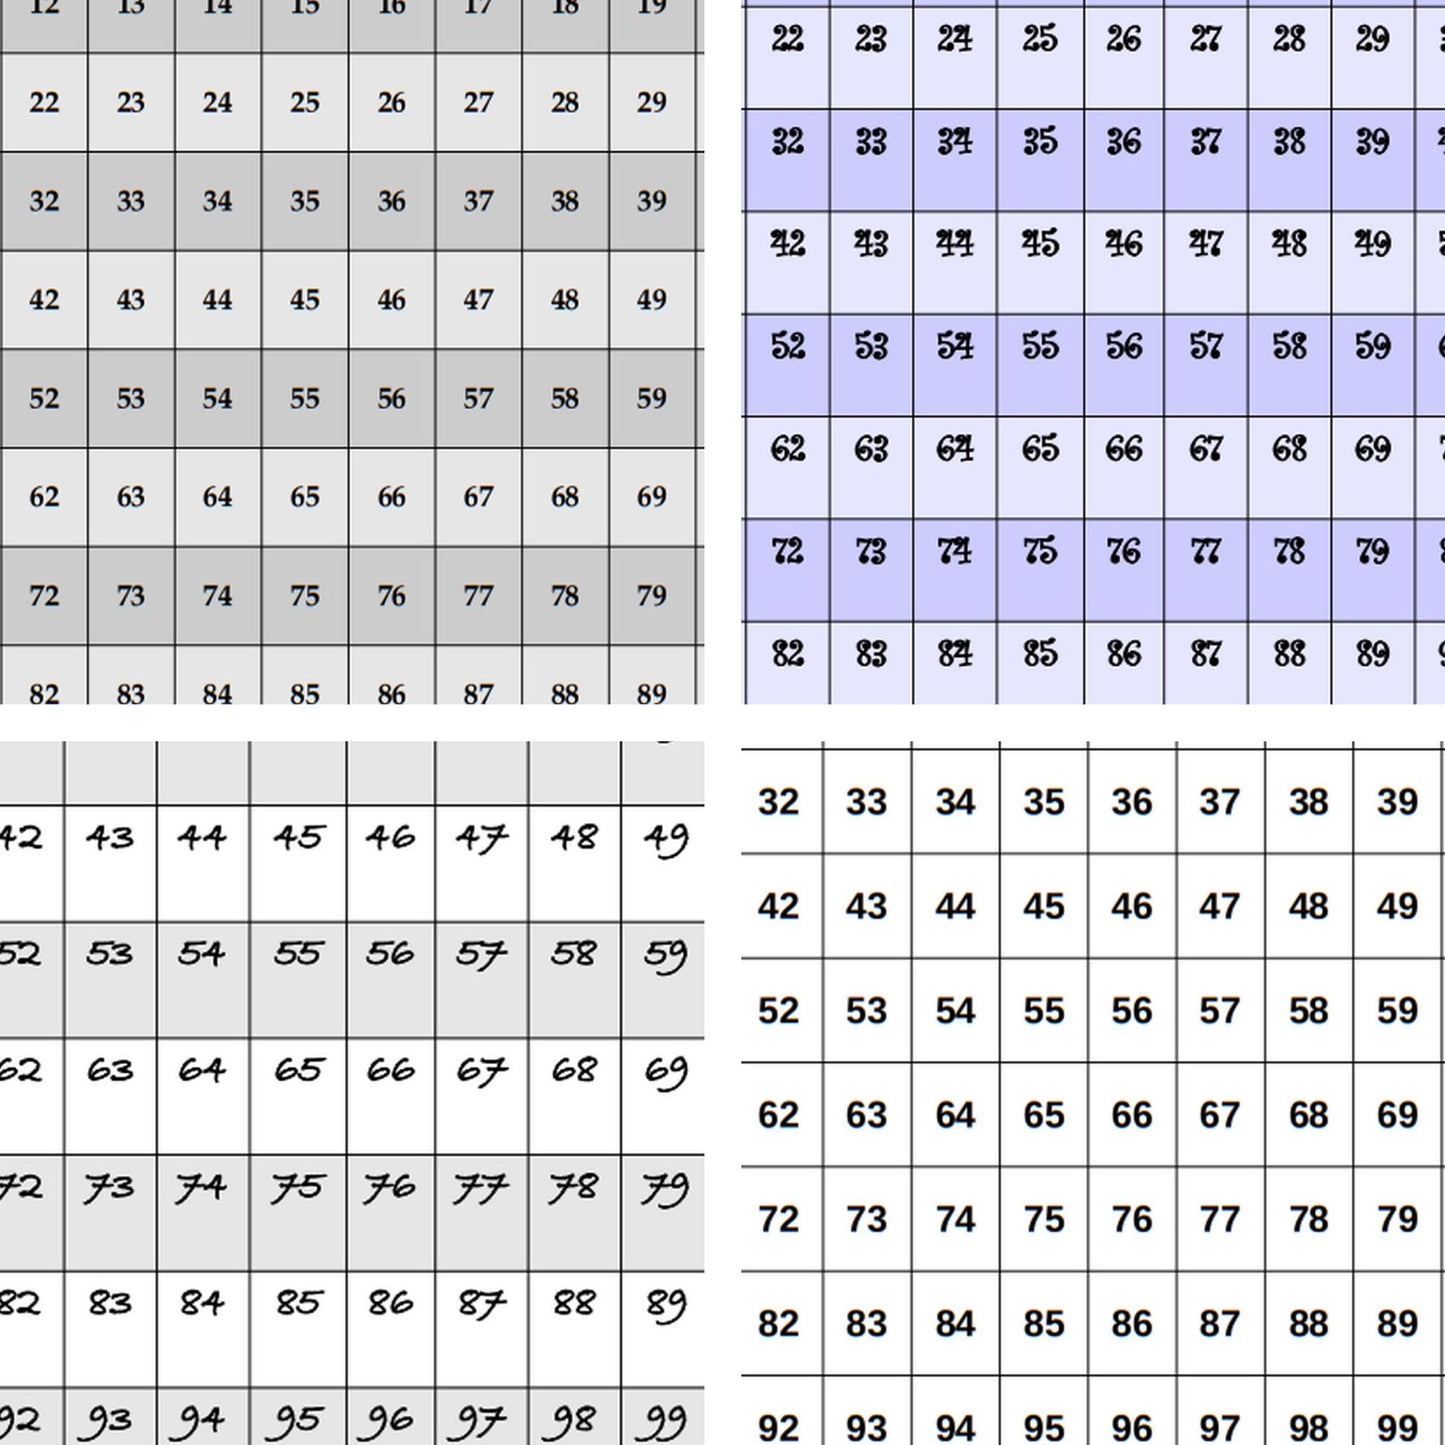 Row Counter Bundle, PDF Digital Download